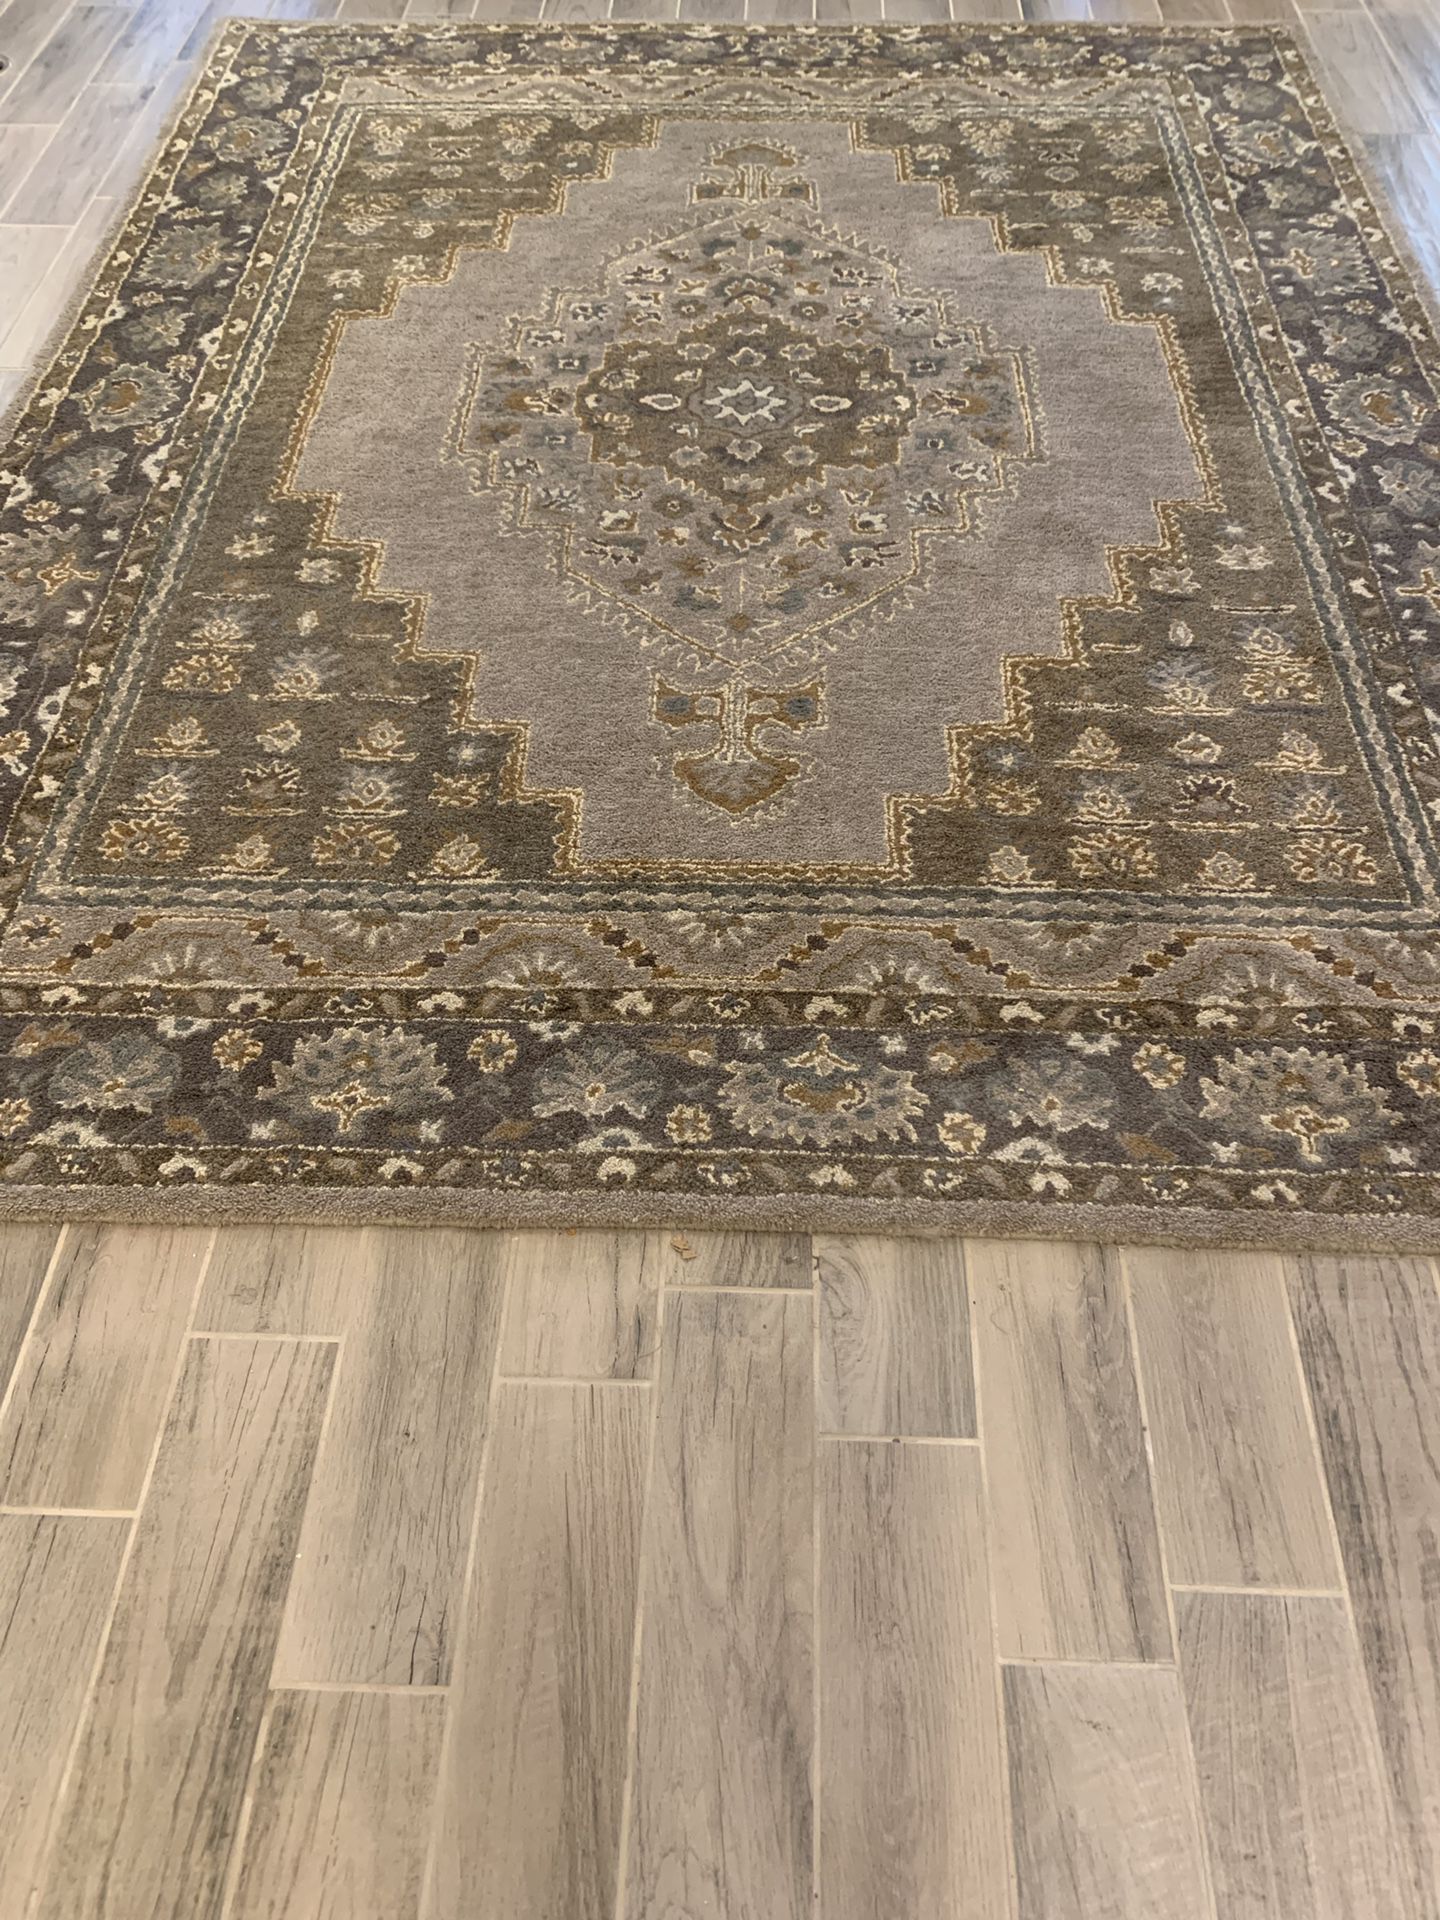 Beautiful 9”12 area rug